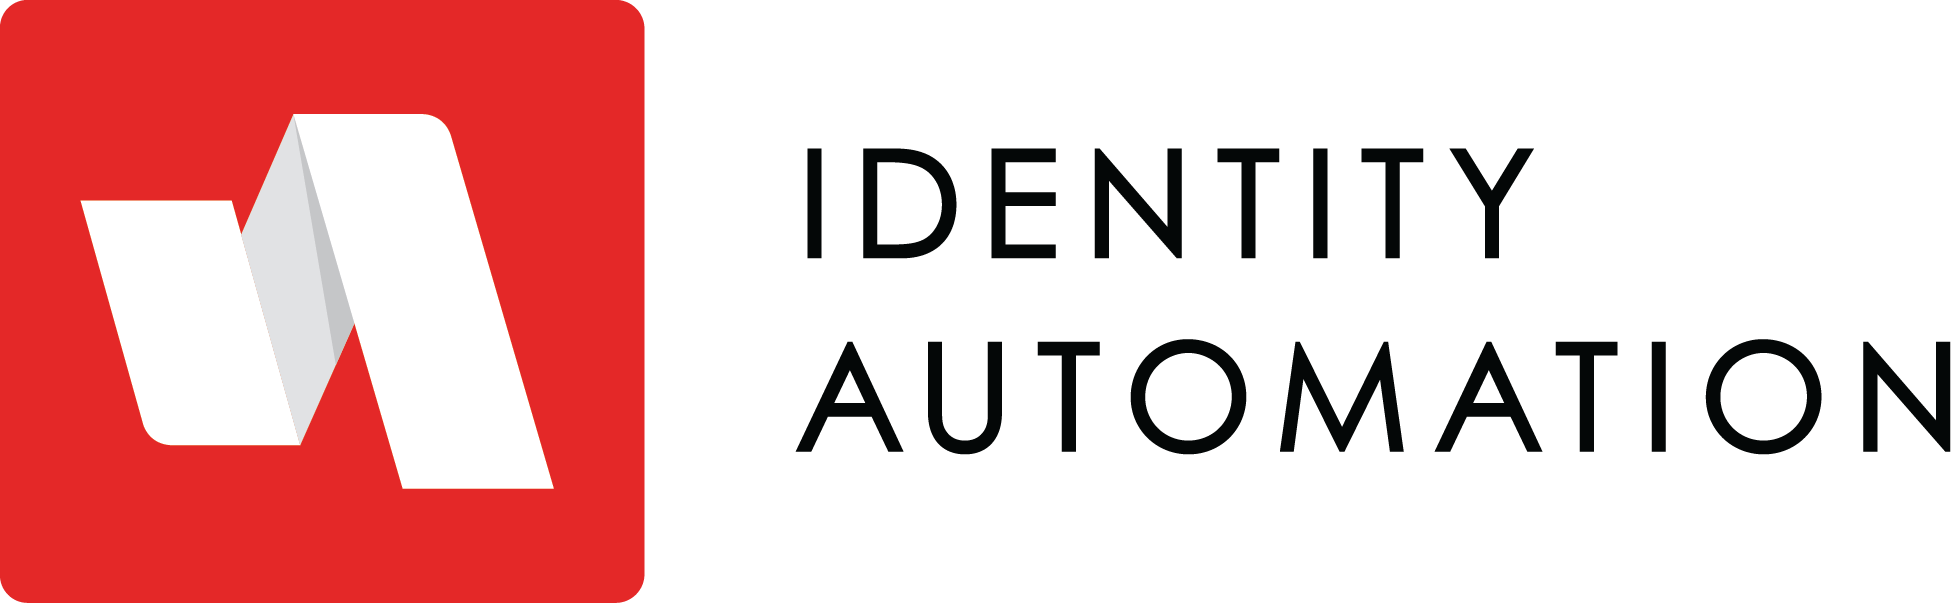 Identity Automation Logo